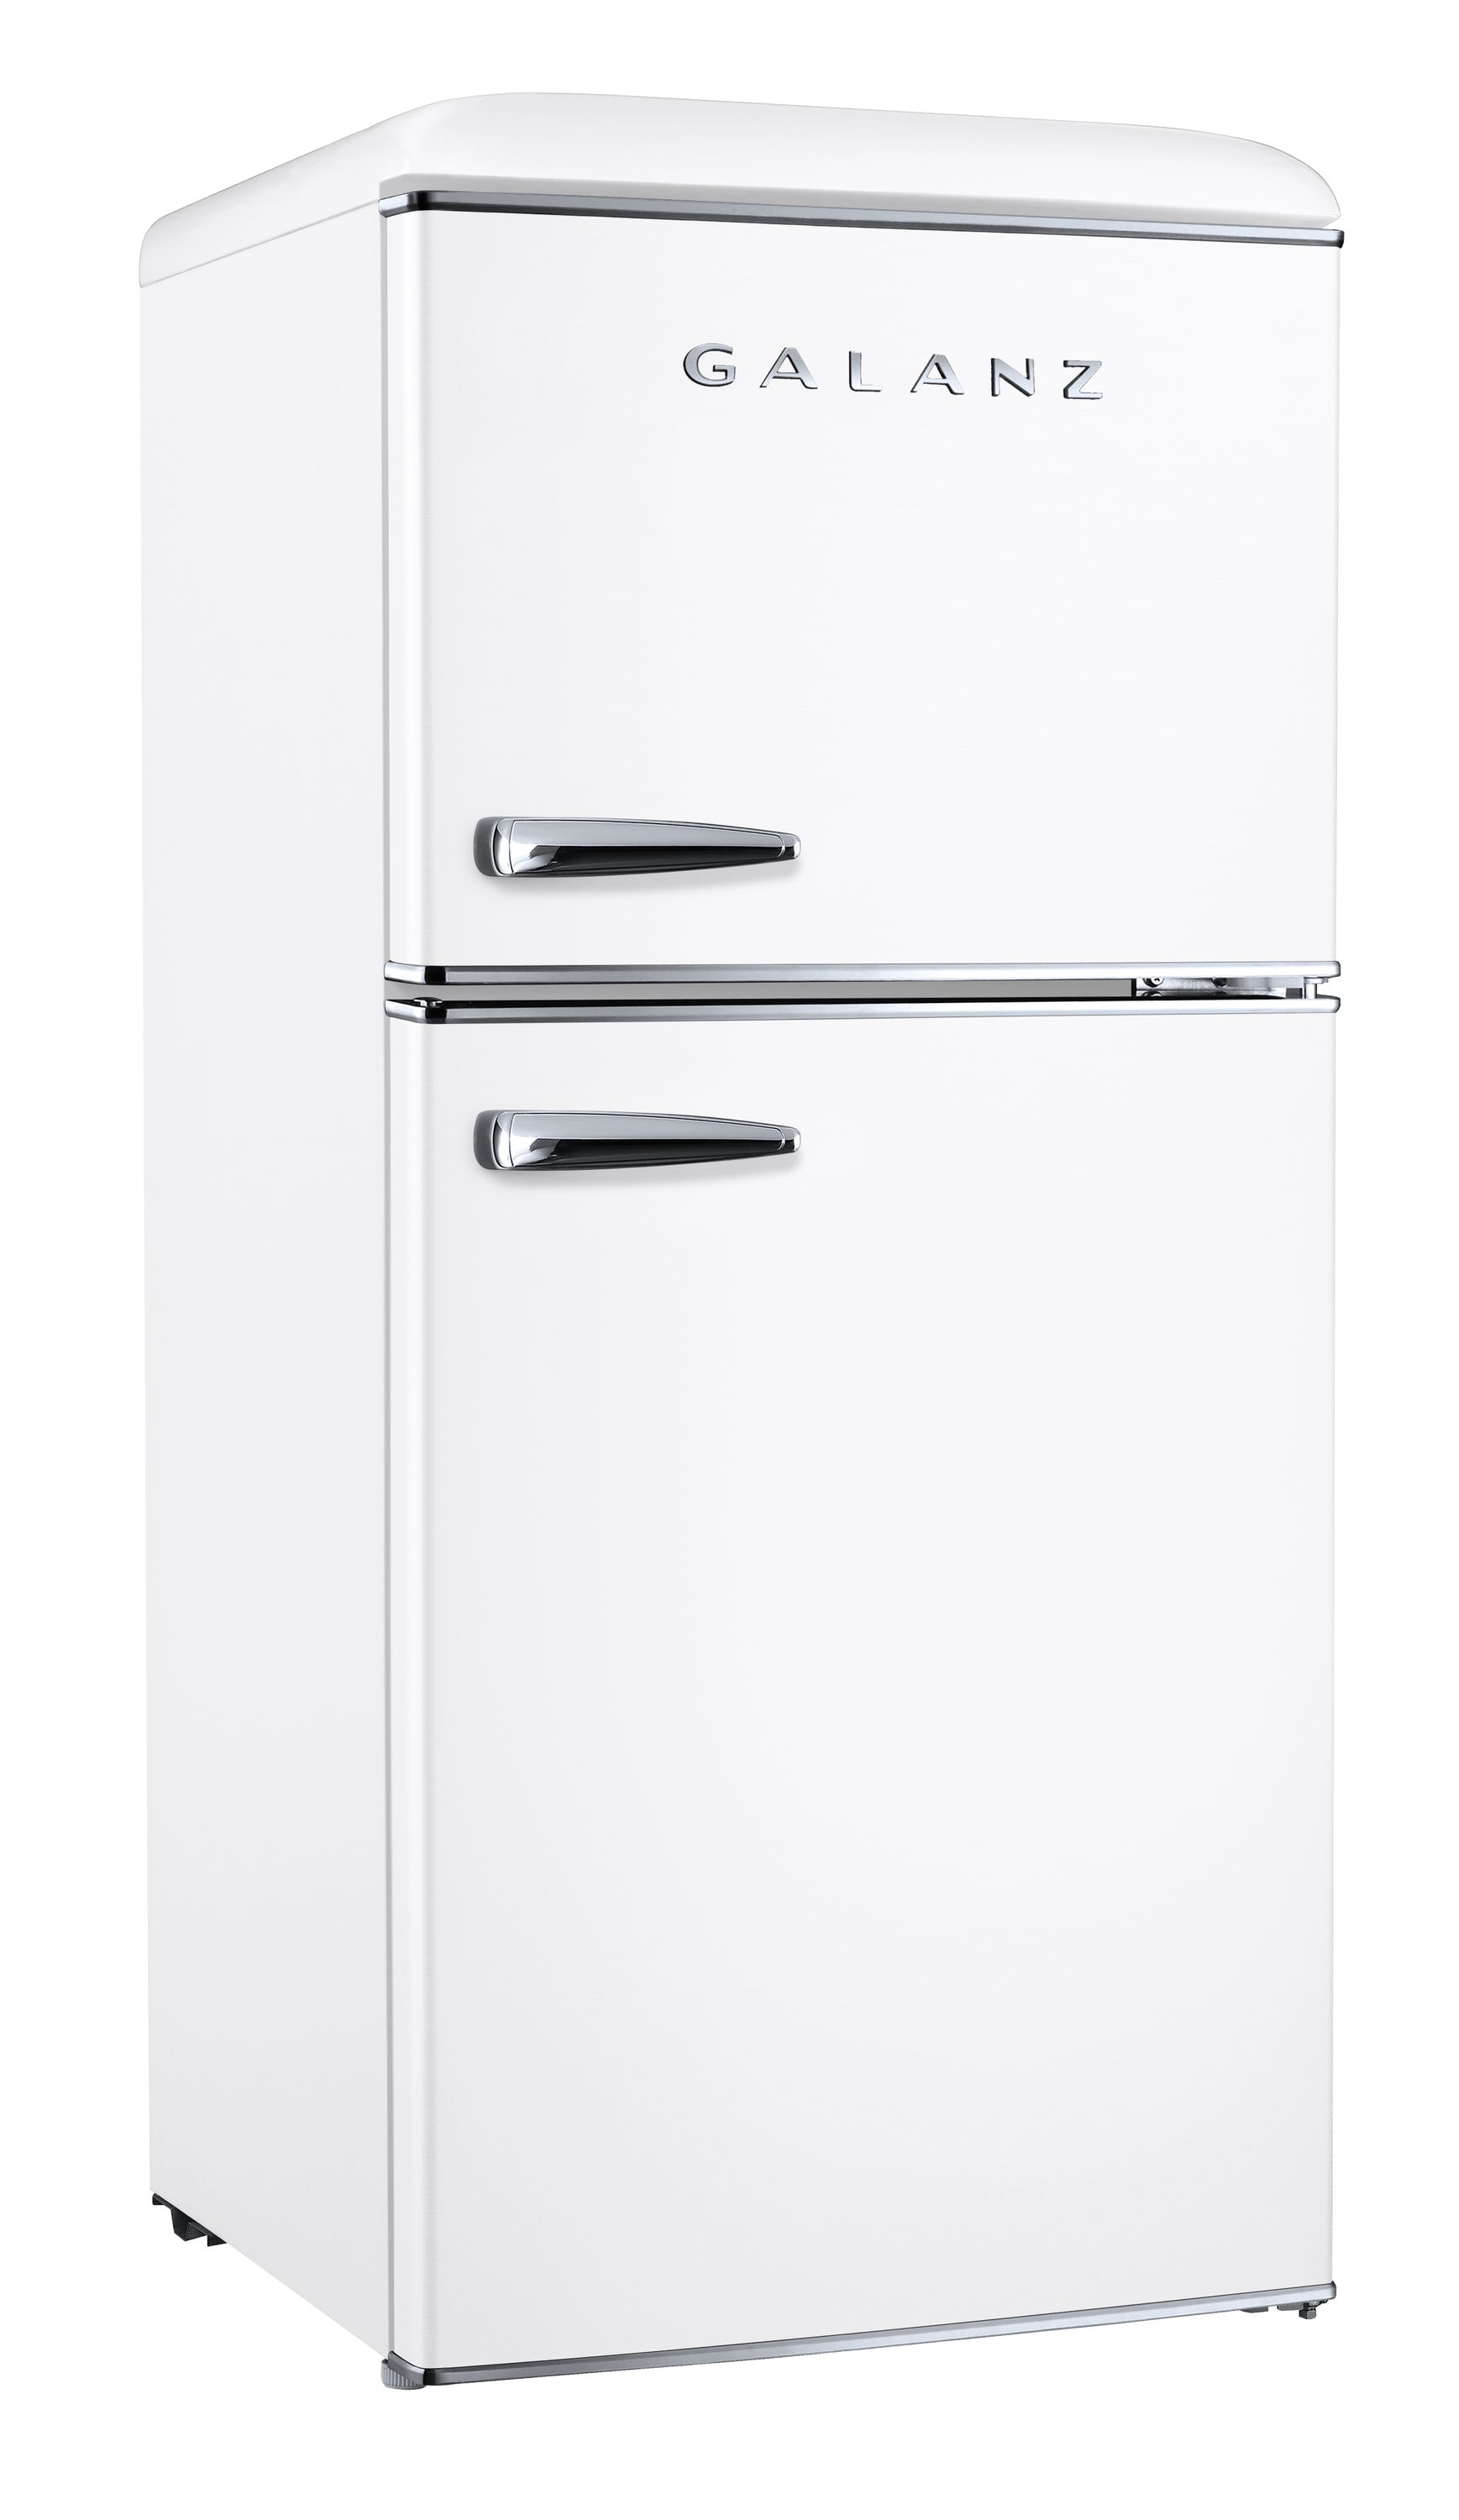 Galanz Refrigerators at Lowes.com